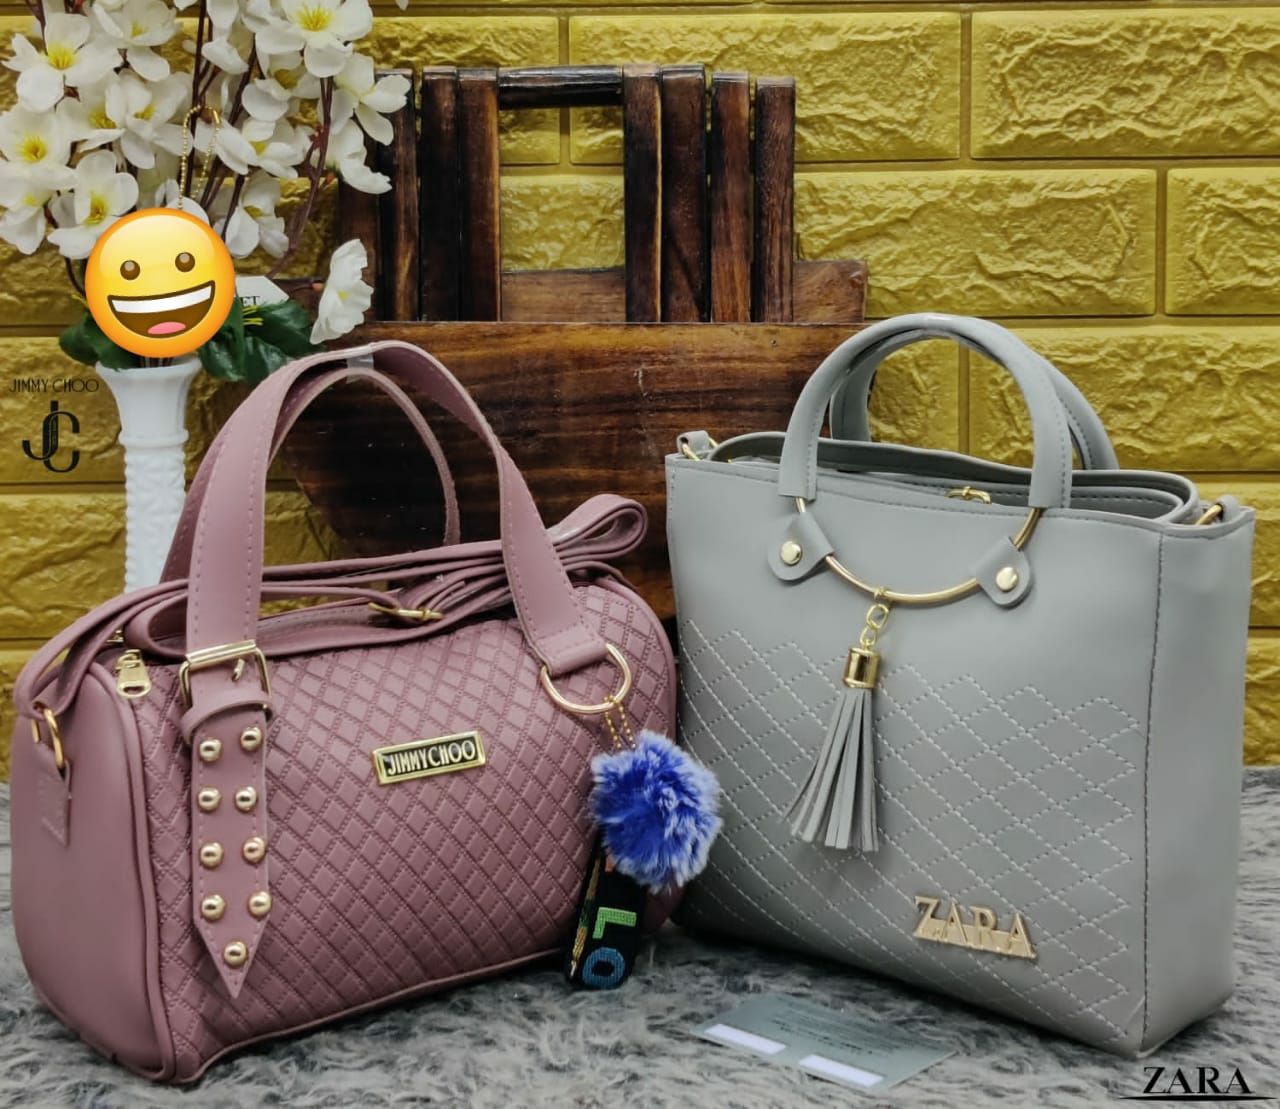 Buy Jimmy Choo Women's PU Handbag (Cream,B-HA 1) at Amazon.in